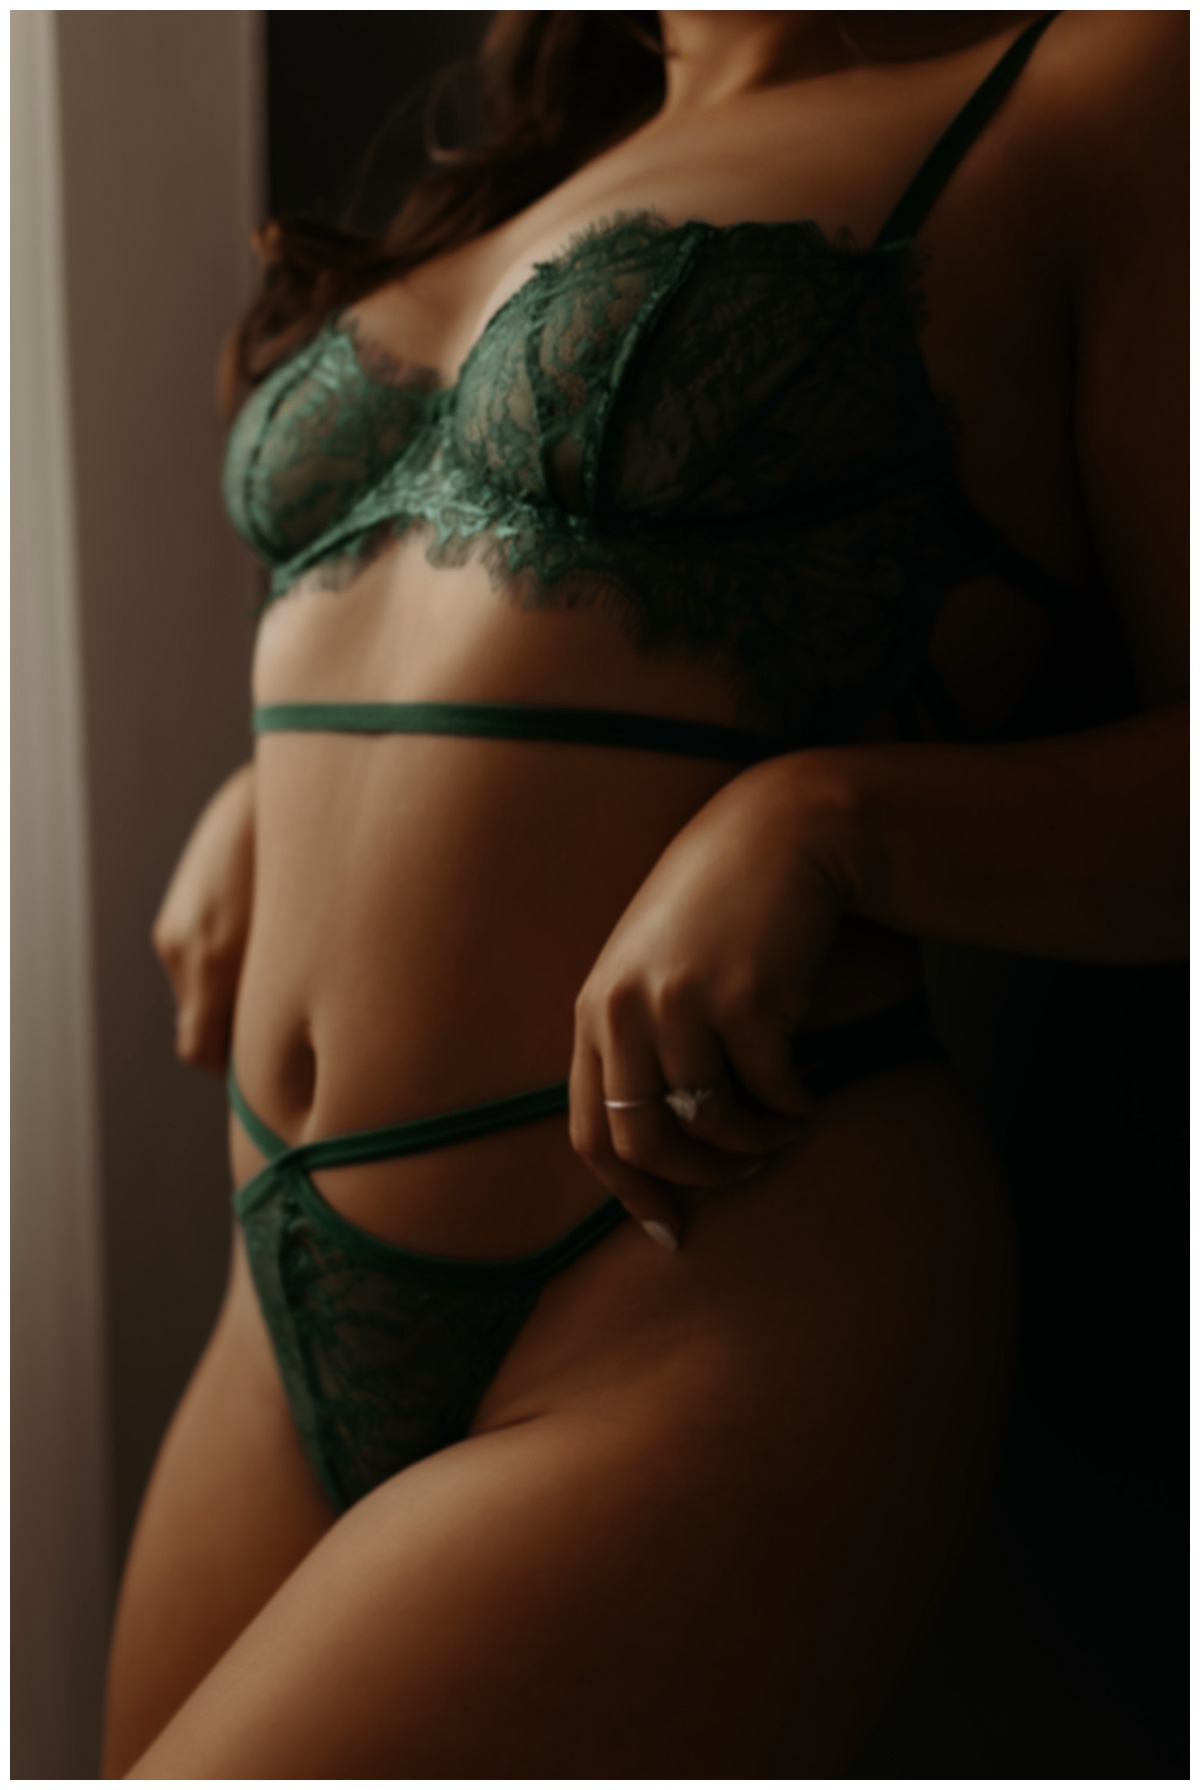 Adult tugs at her green lingerie for Minneapolis Boudoir Photographer